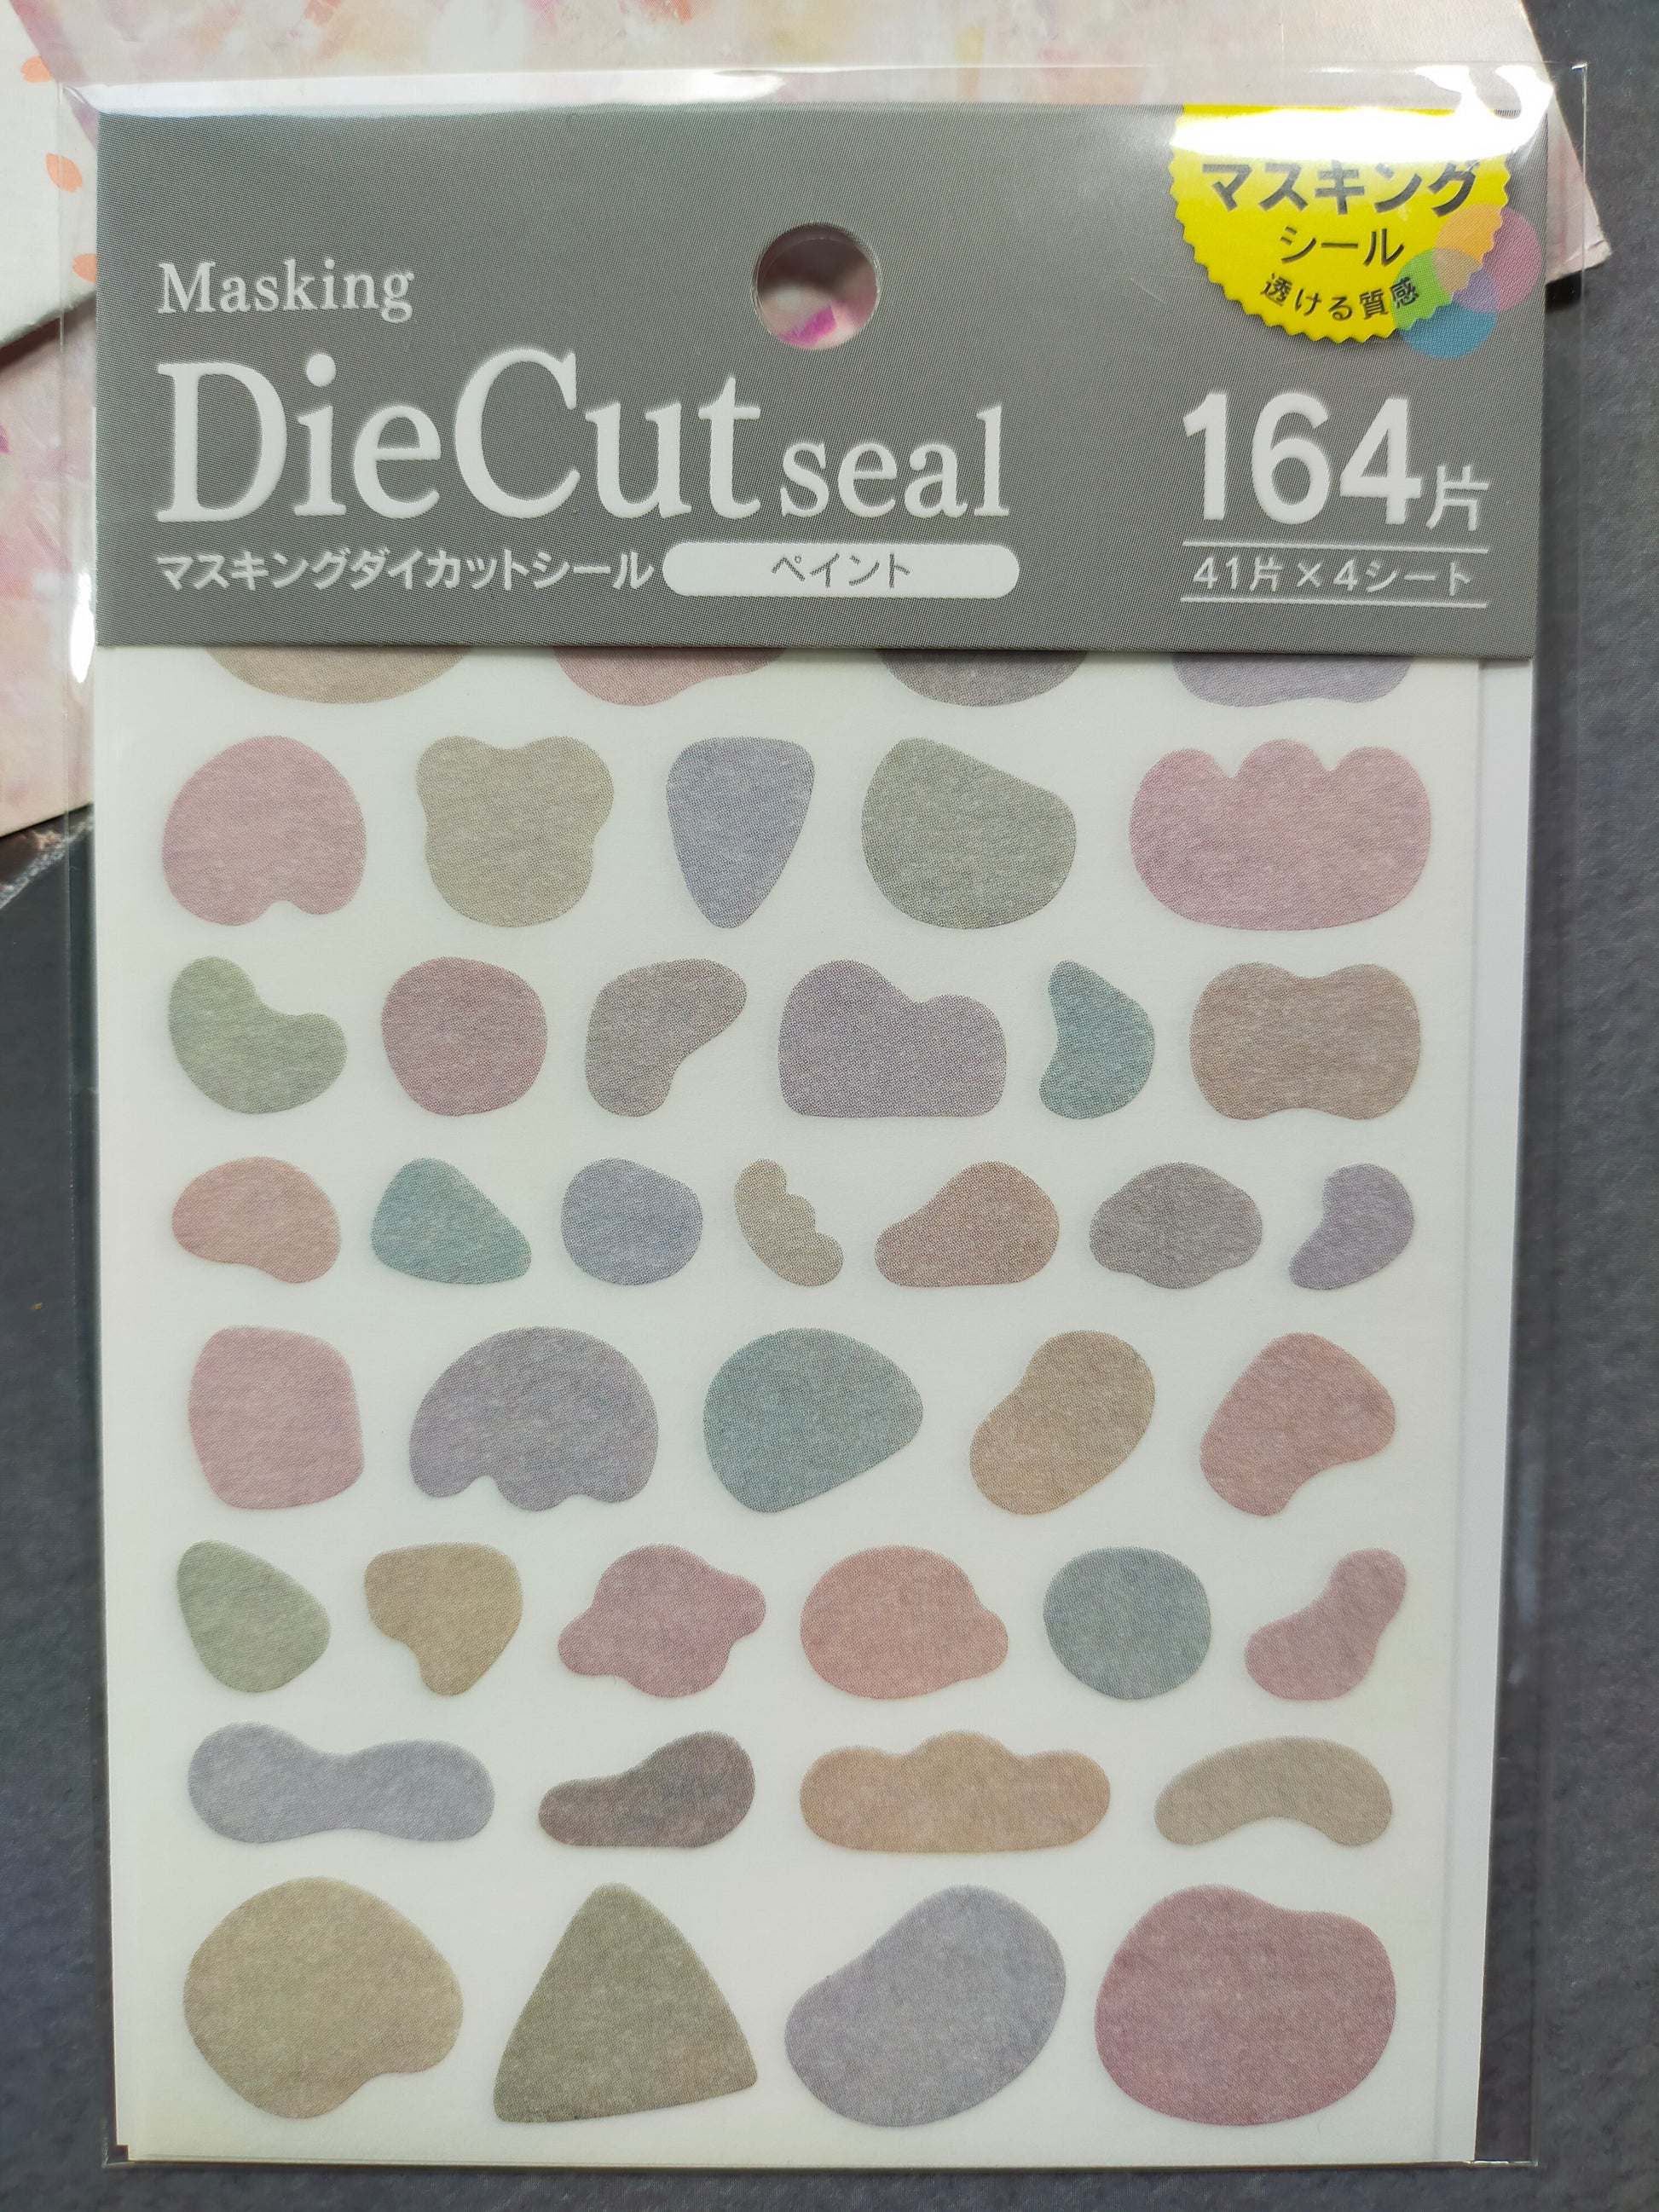 Die cut seal ,Kyowa_ Paint 164 pcs